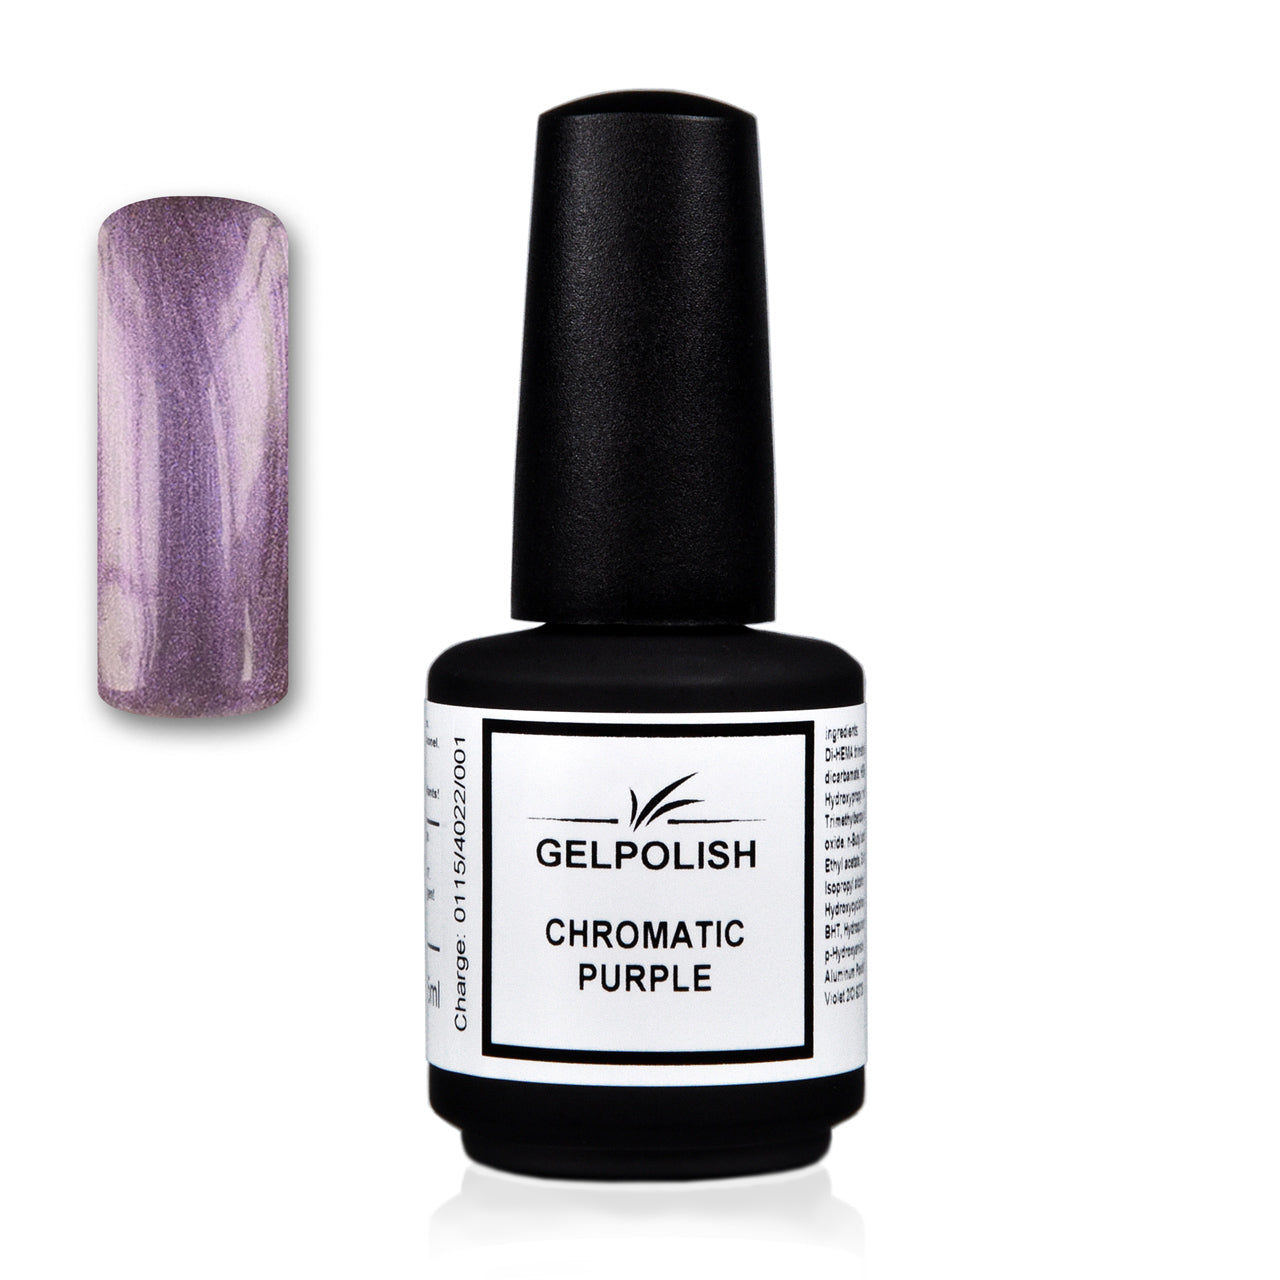 Gelpolish VSP Chromatic Purple